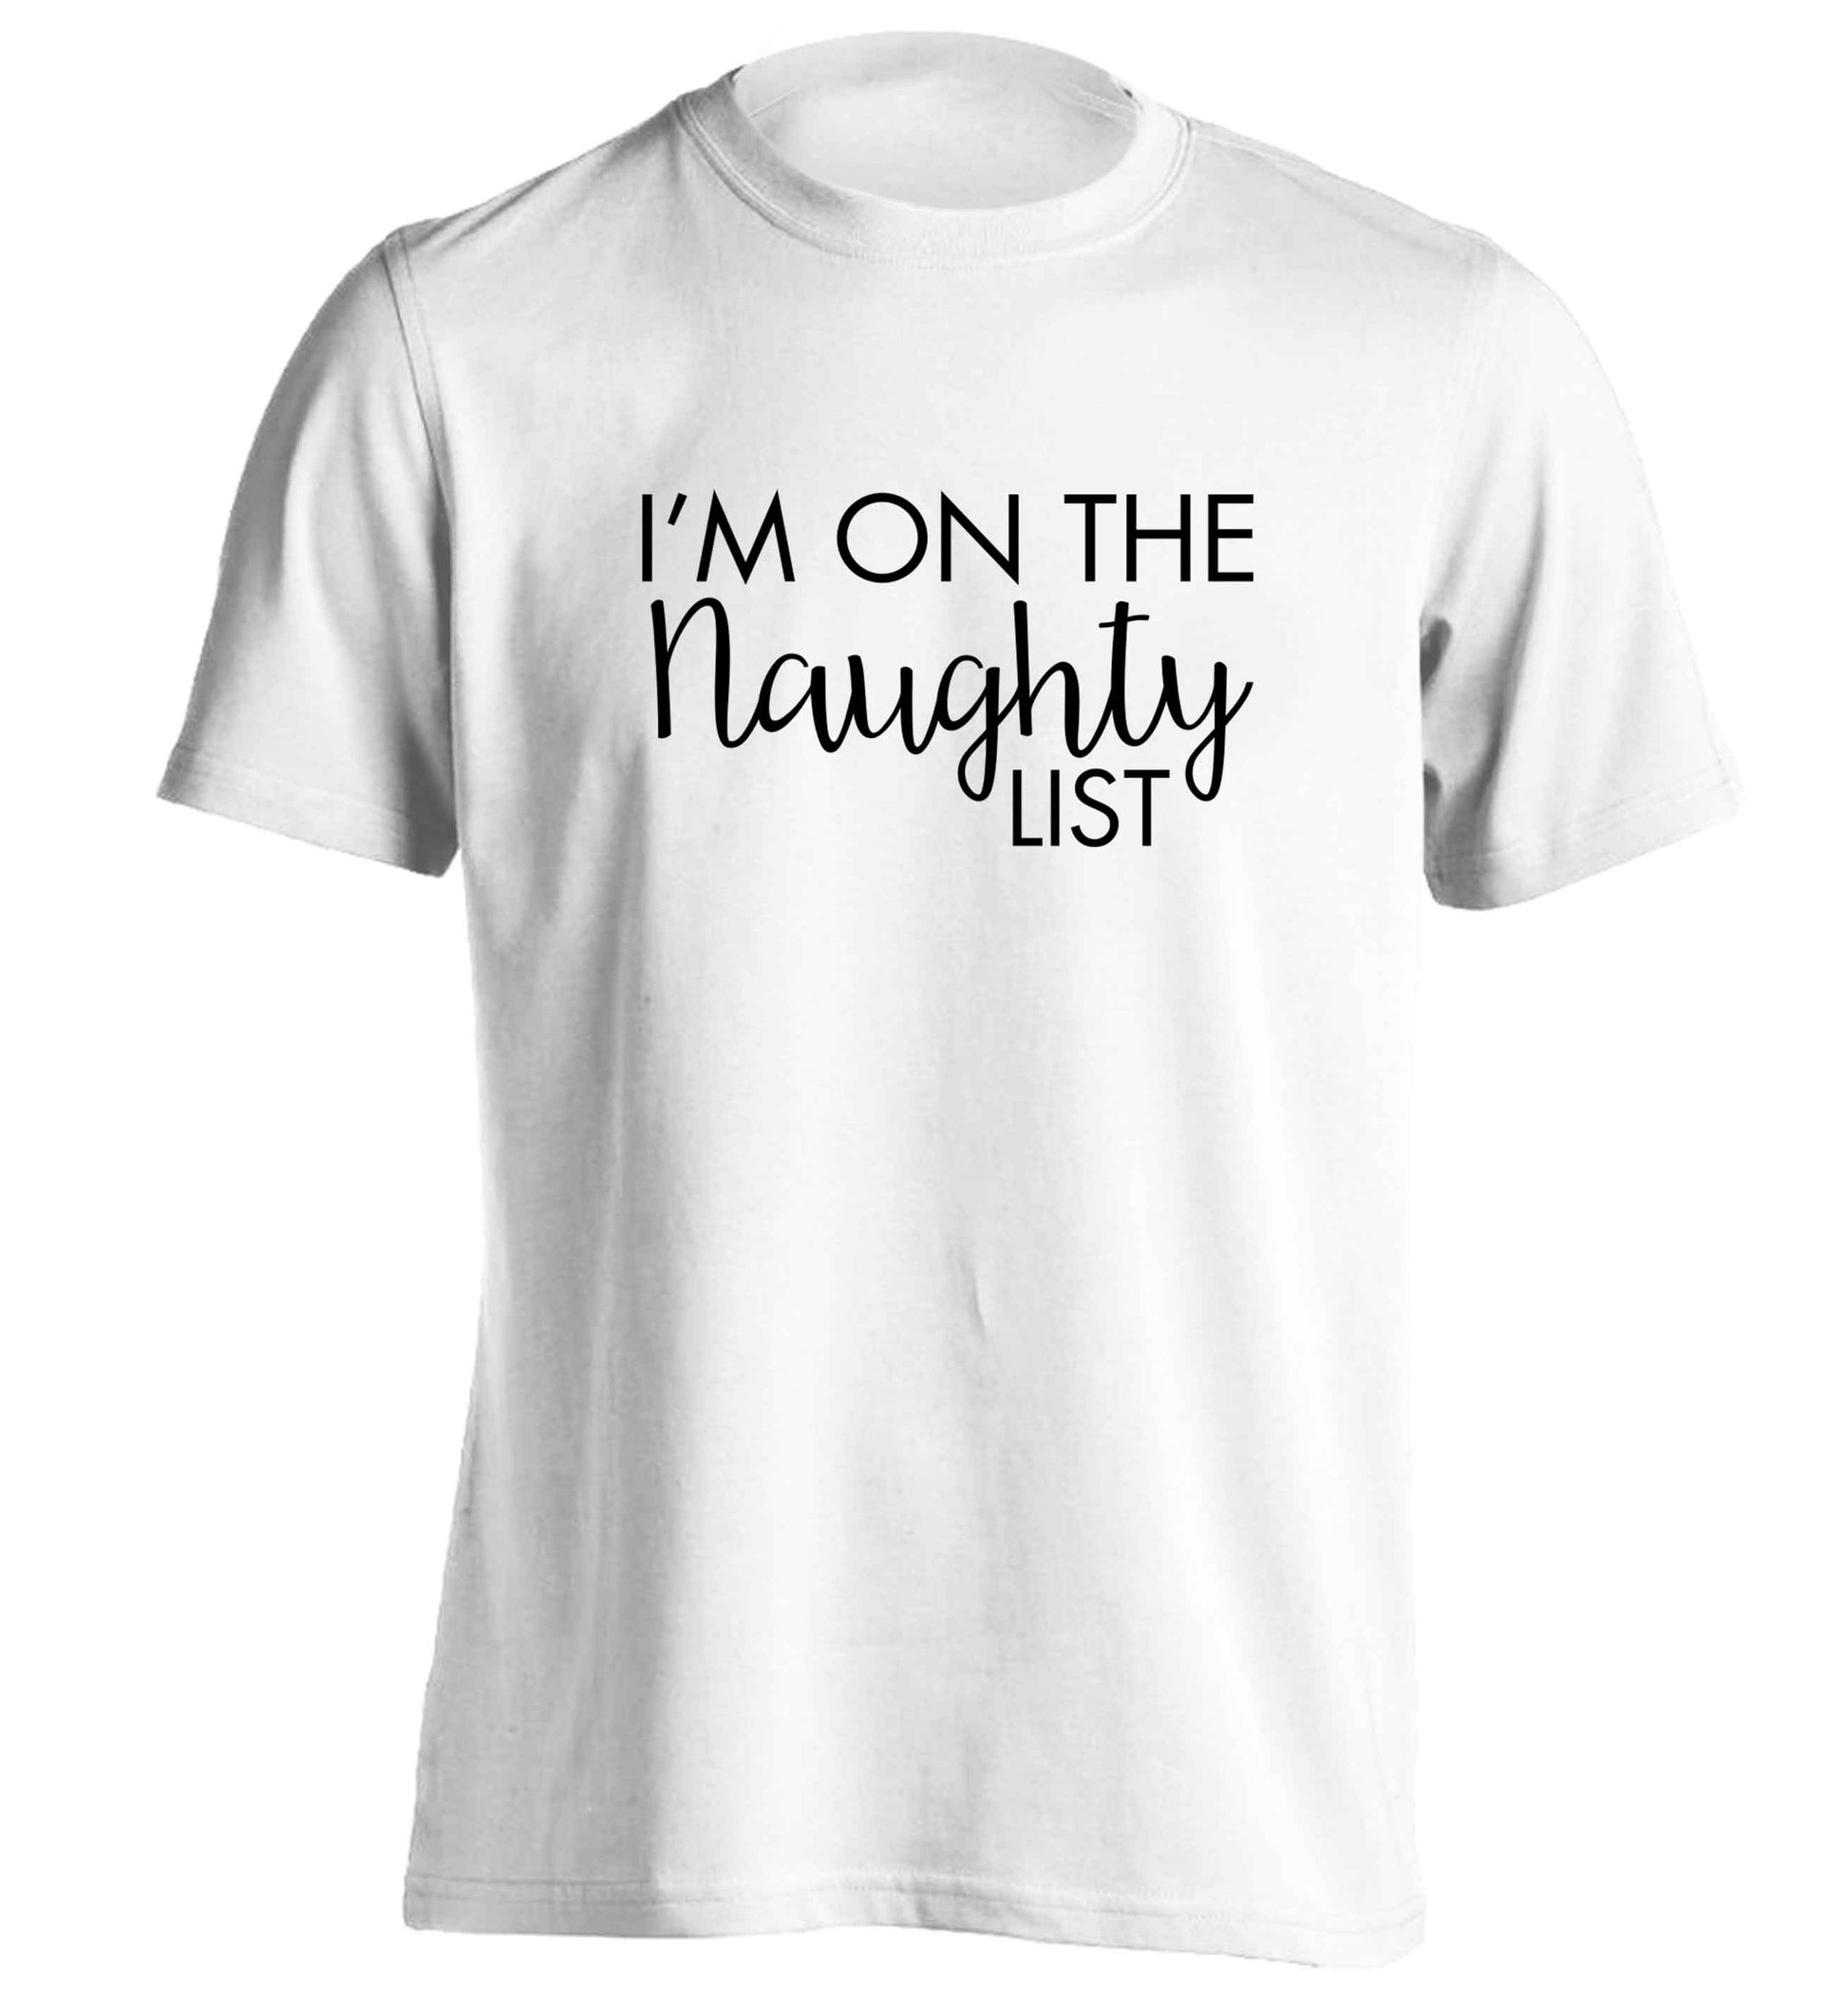 I'm on the naughty list adults unisex white Tshirt 2XL